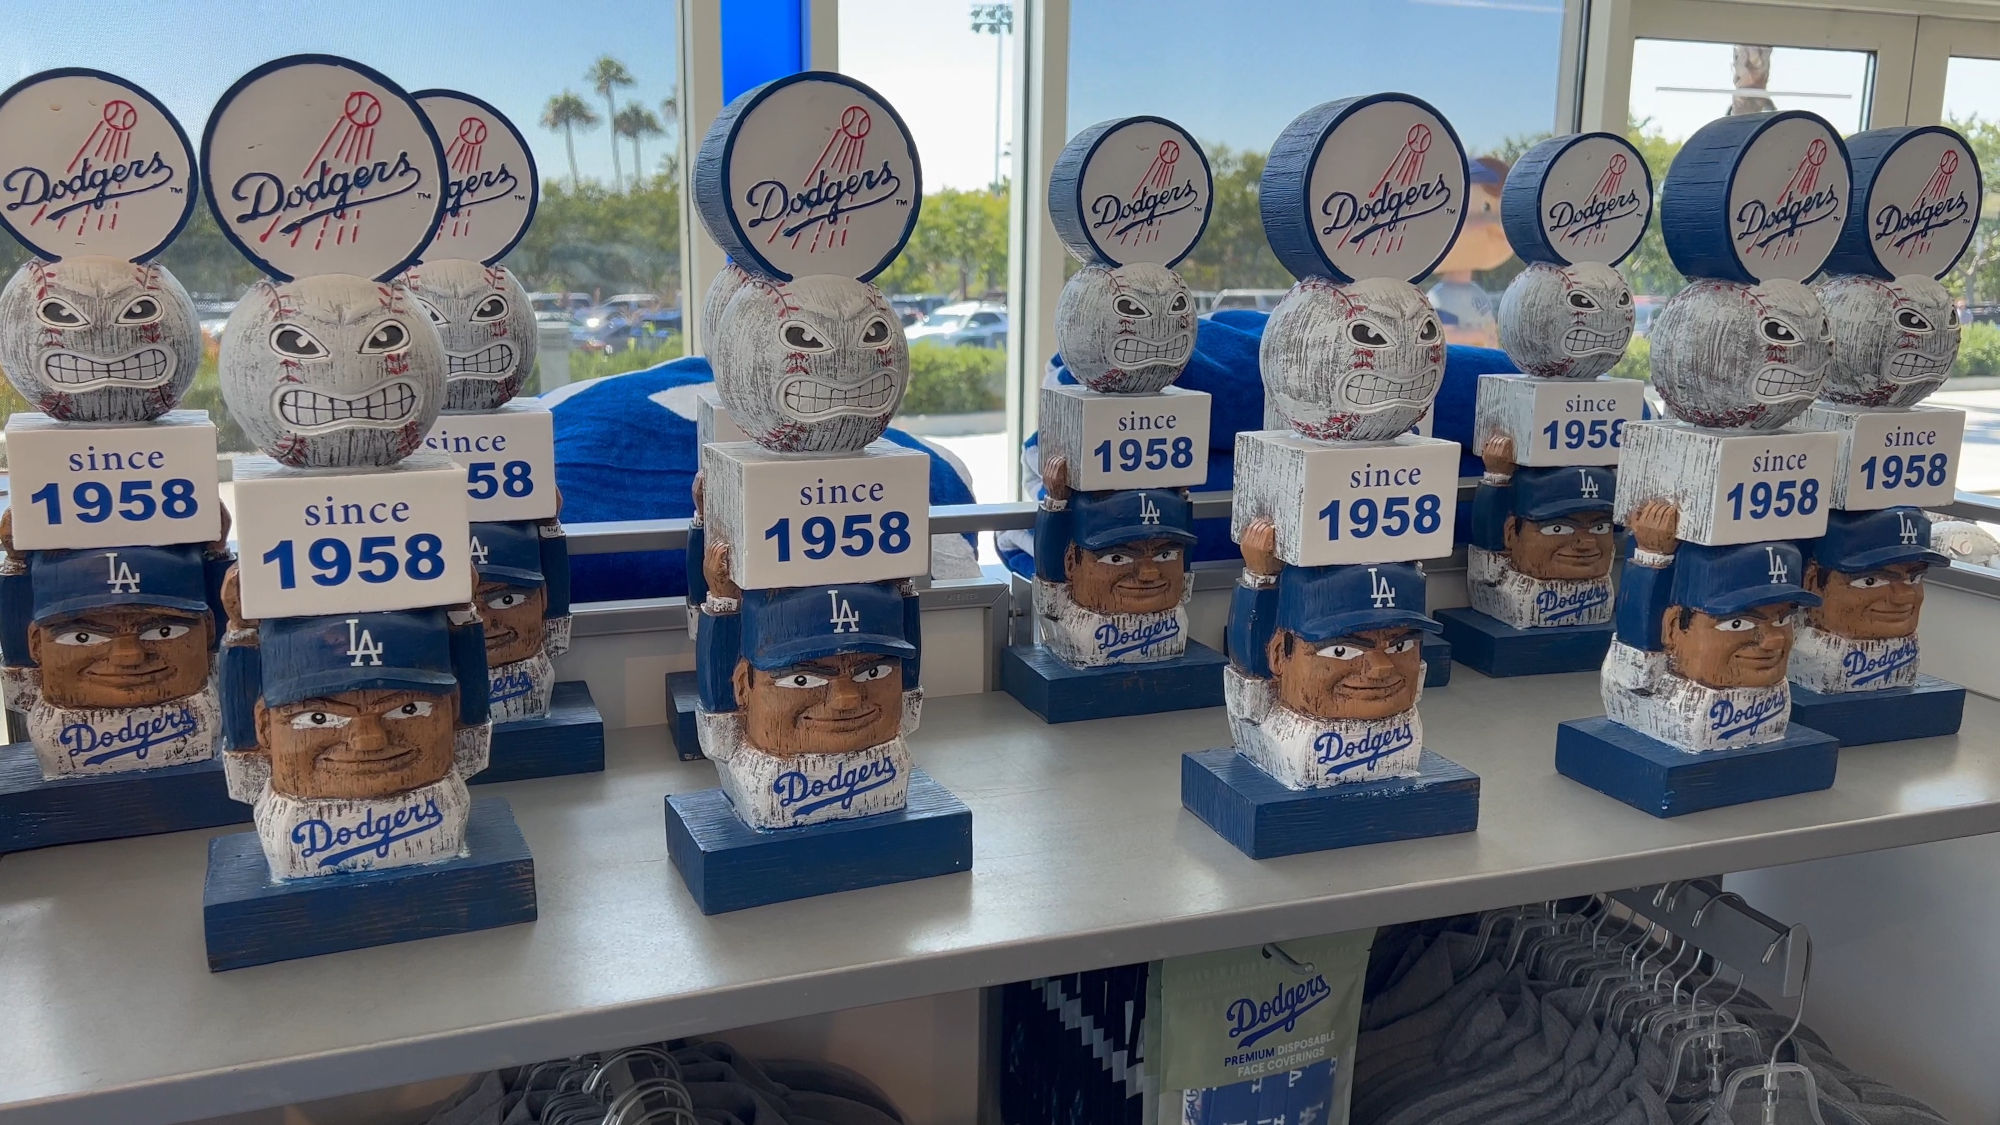 Dodgers Since 1958